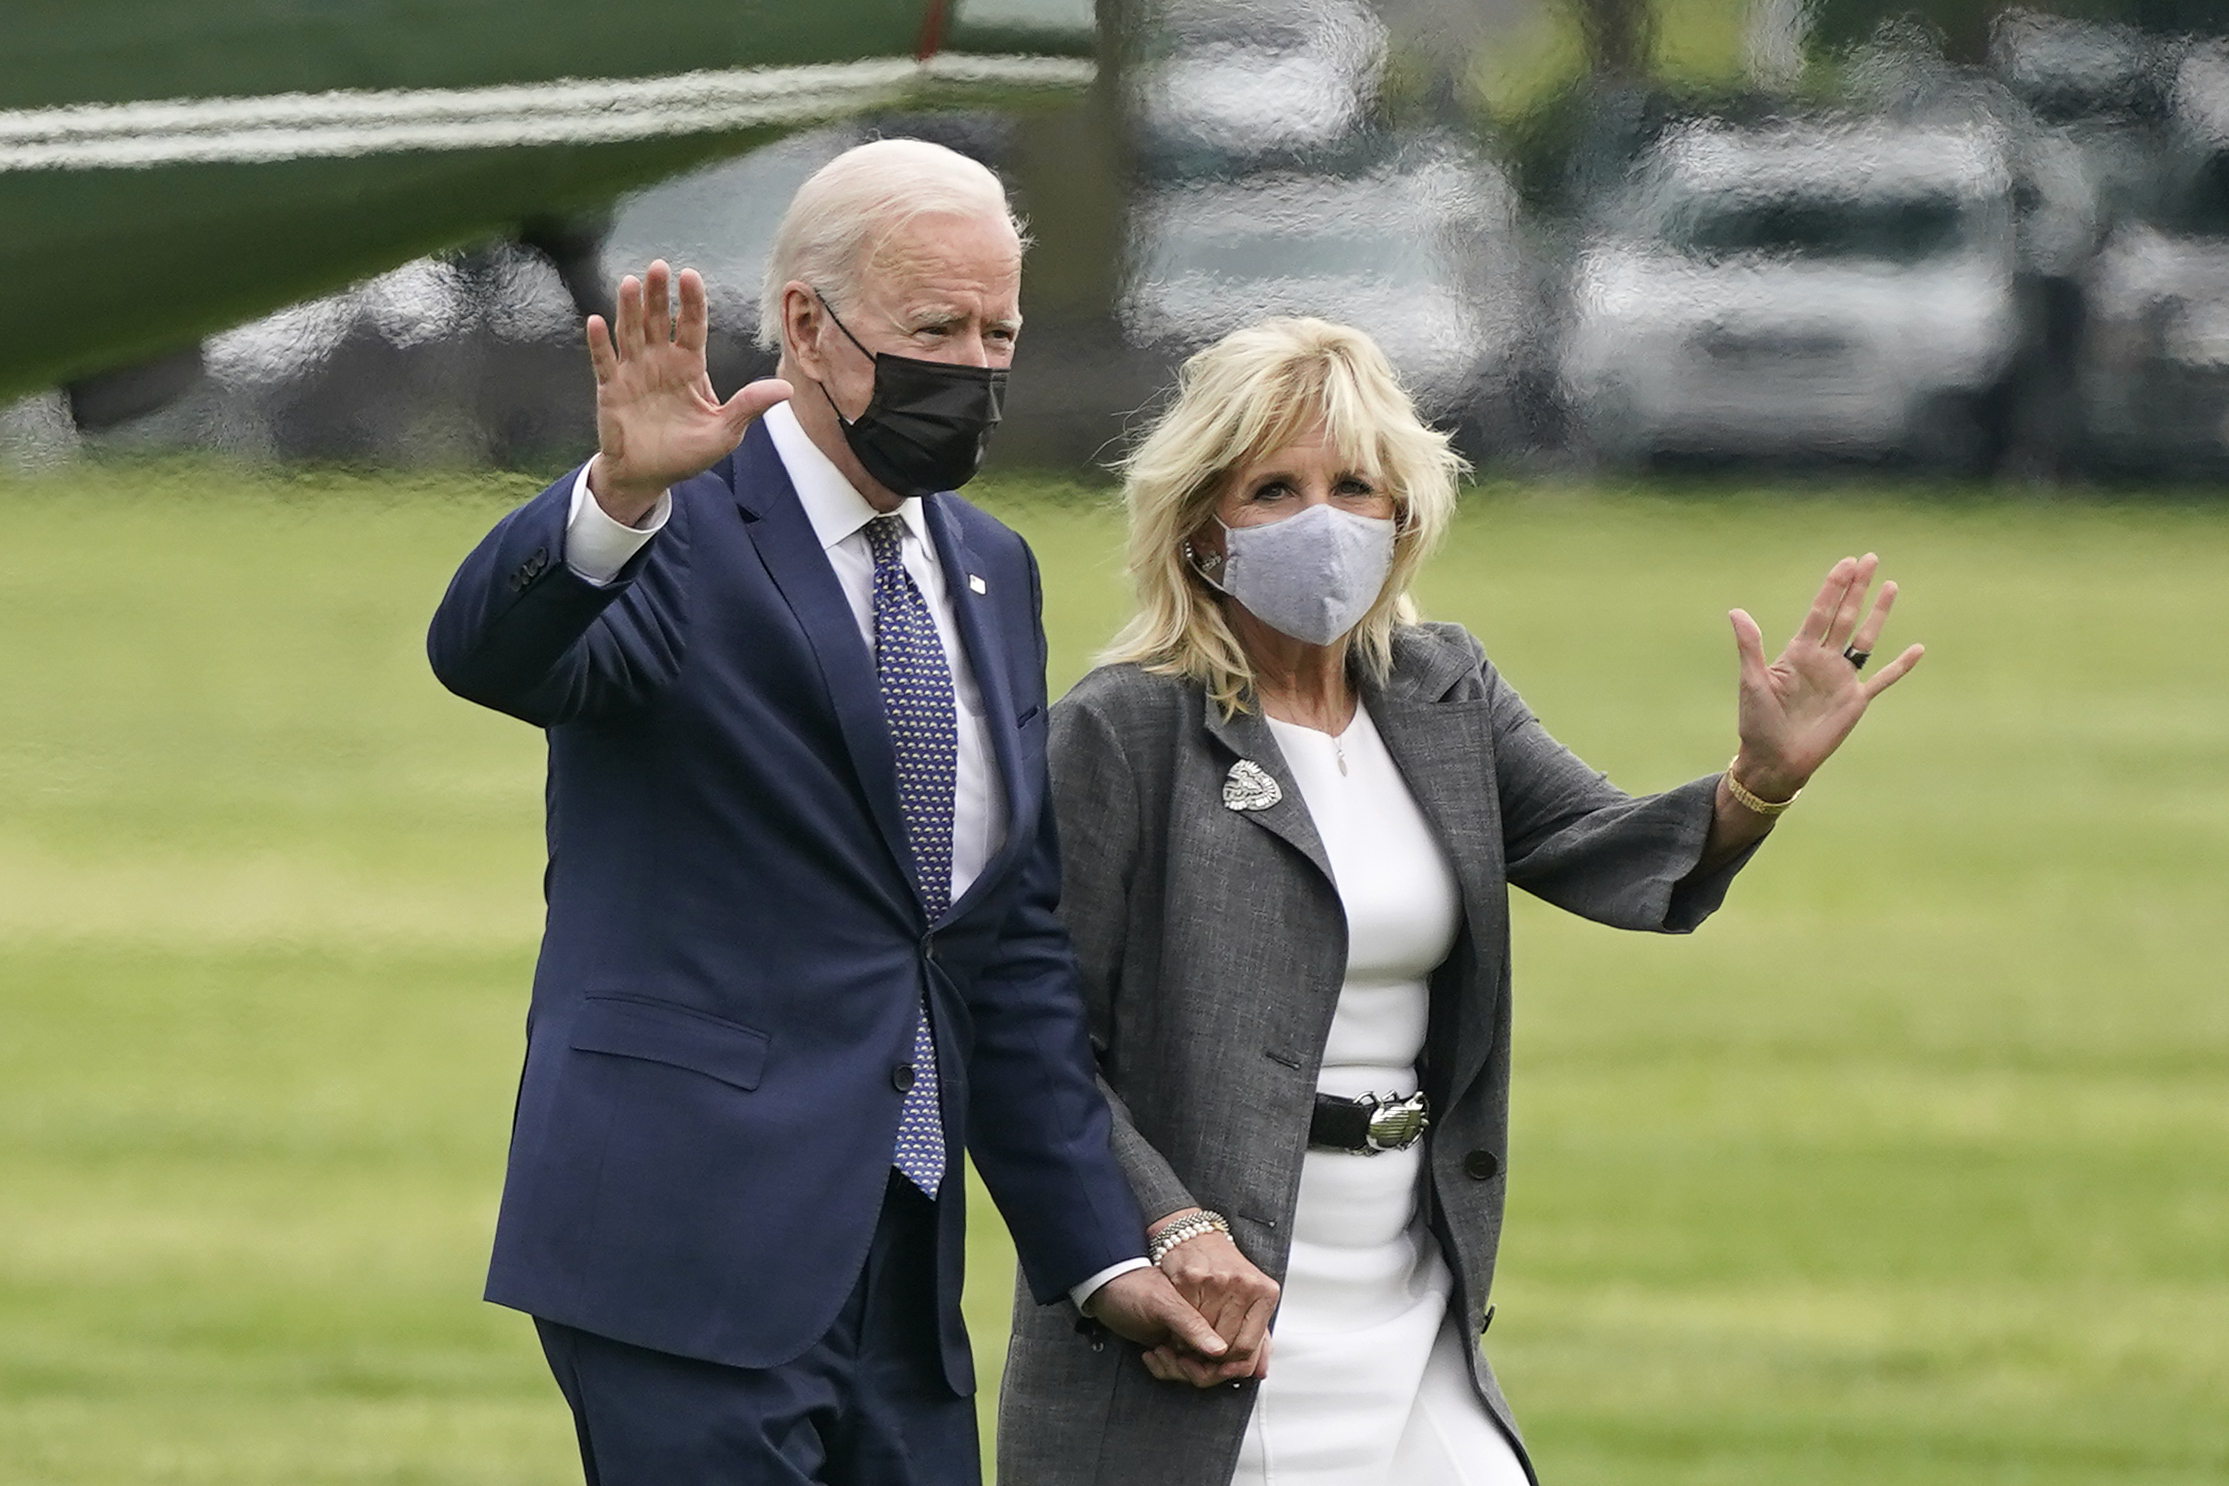 President Joe Biden and First Lady Jill Biden wave while wearing masks